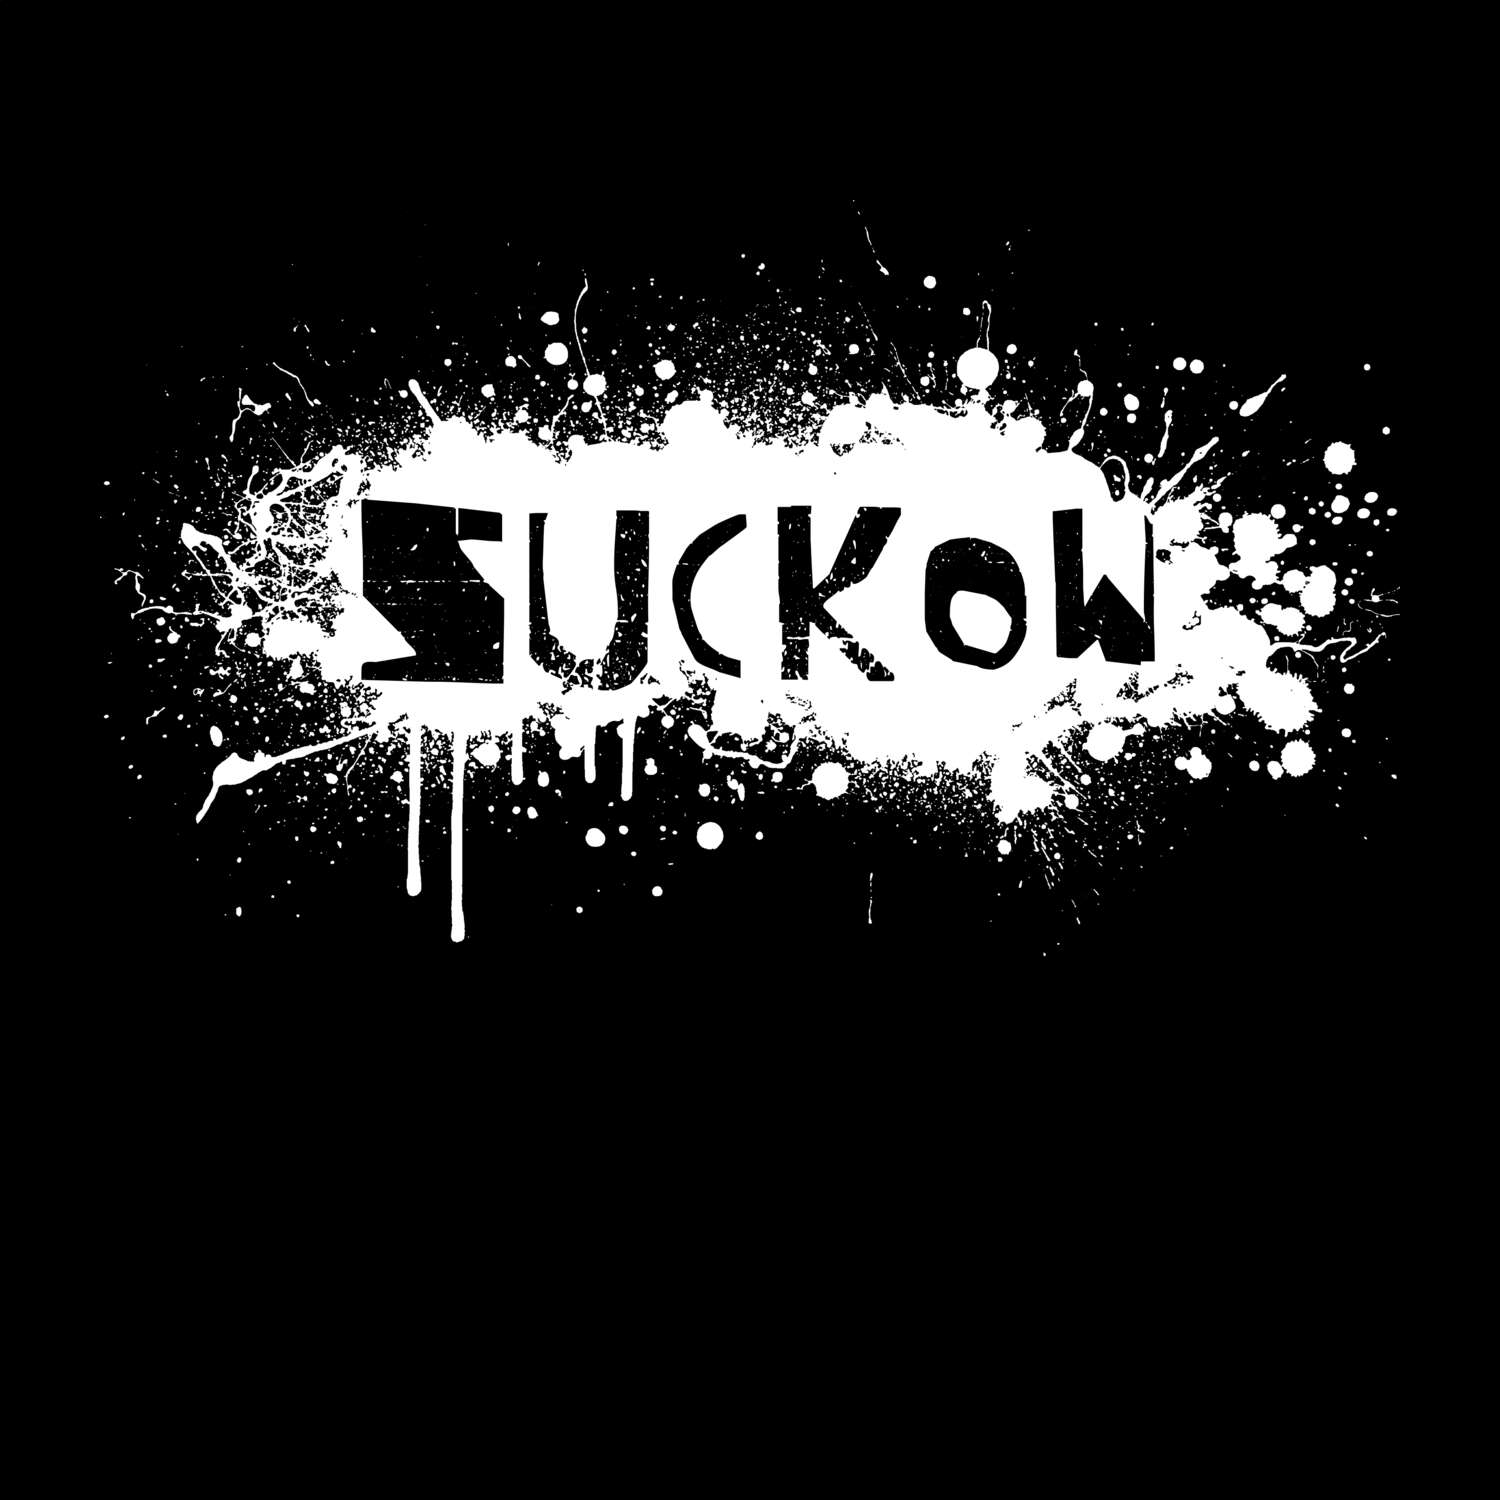 Suckow T-Shirt »Paint Splash Punk«